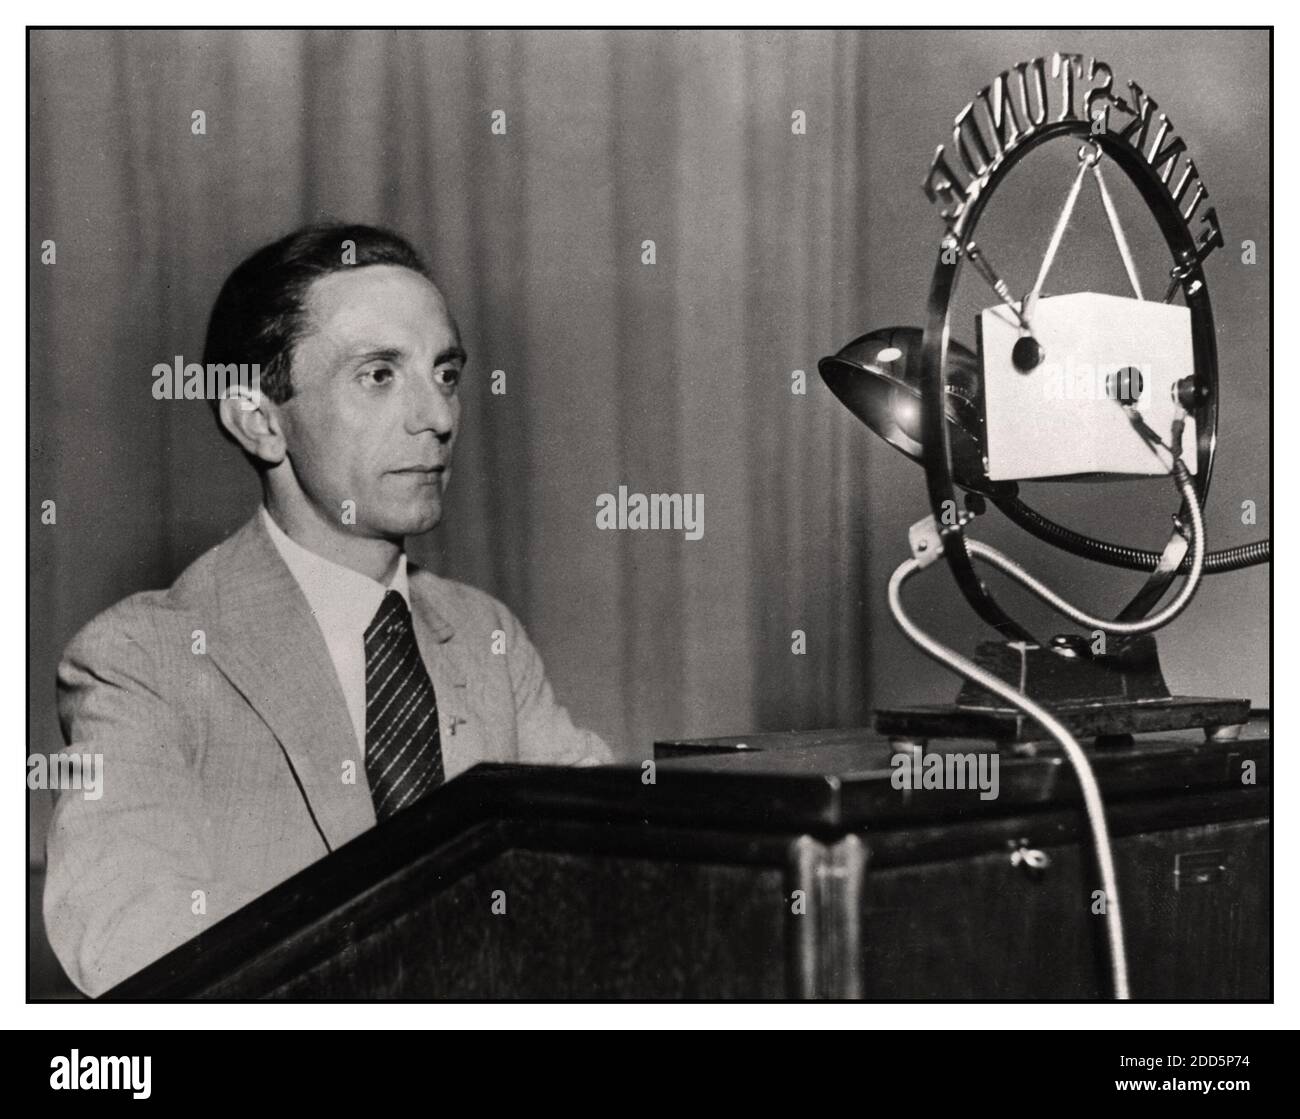 Radio Broadcast 1930s Stockfotos und -bilder Kaufen - Alamy